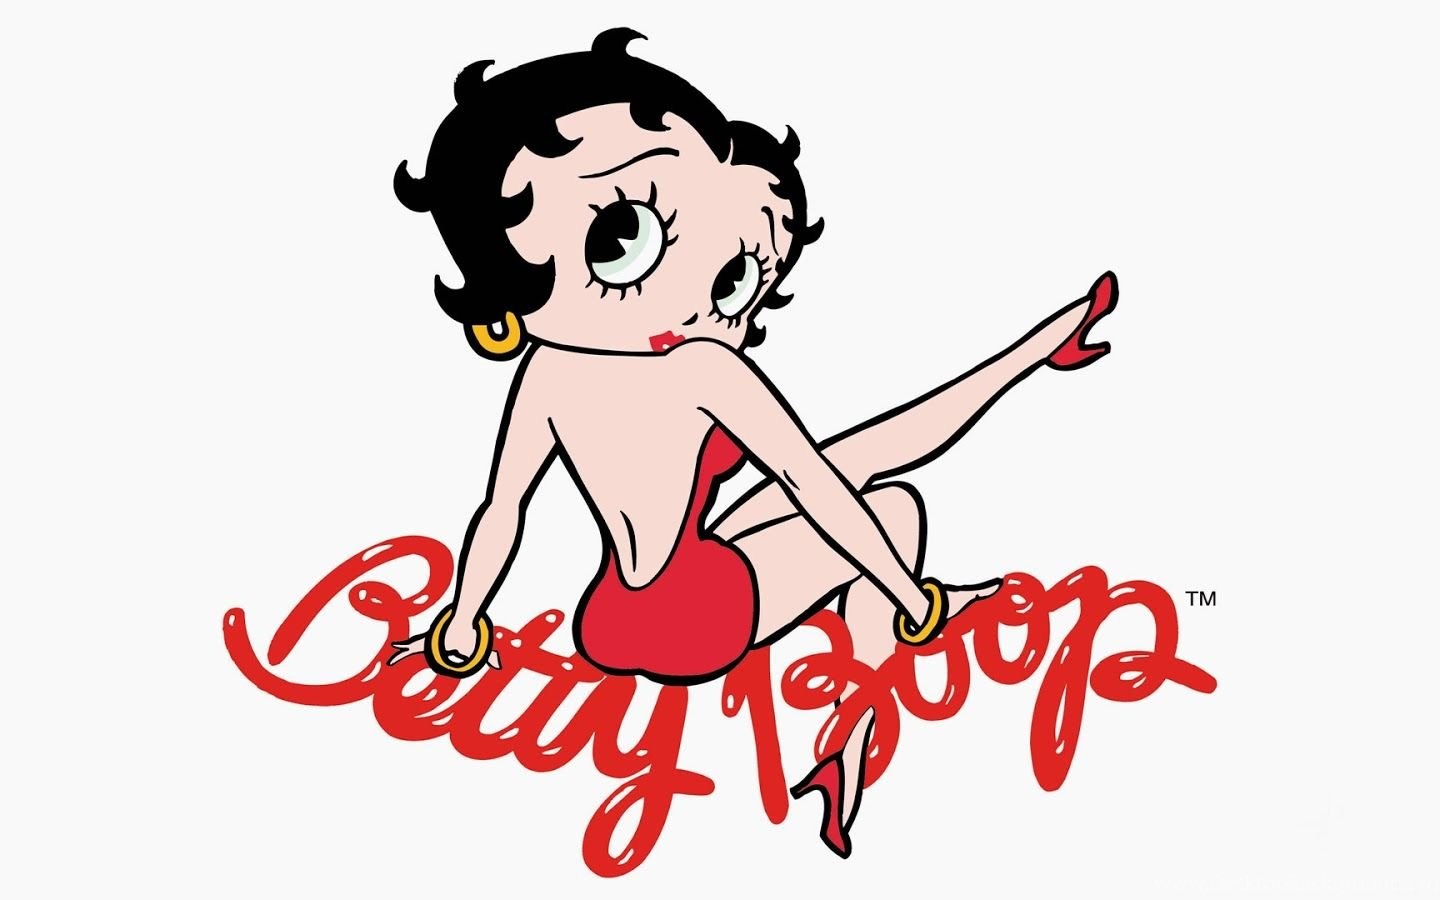 Betty boop theme song lyrics